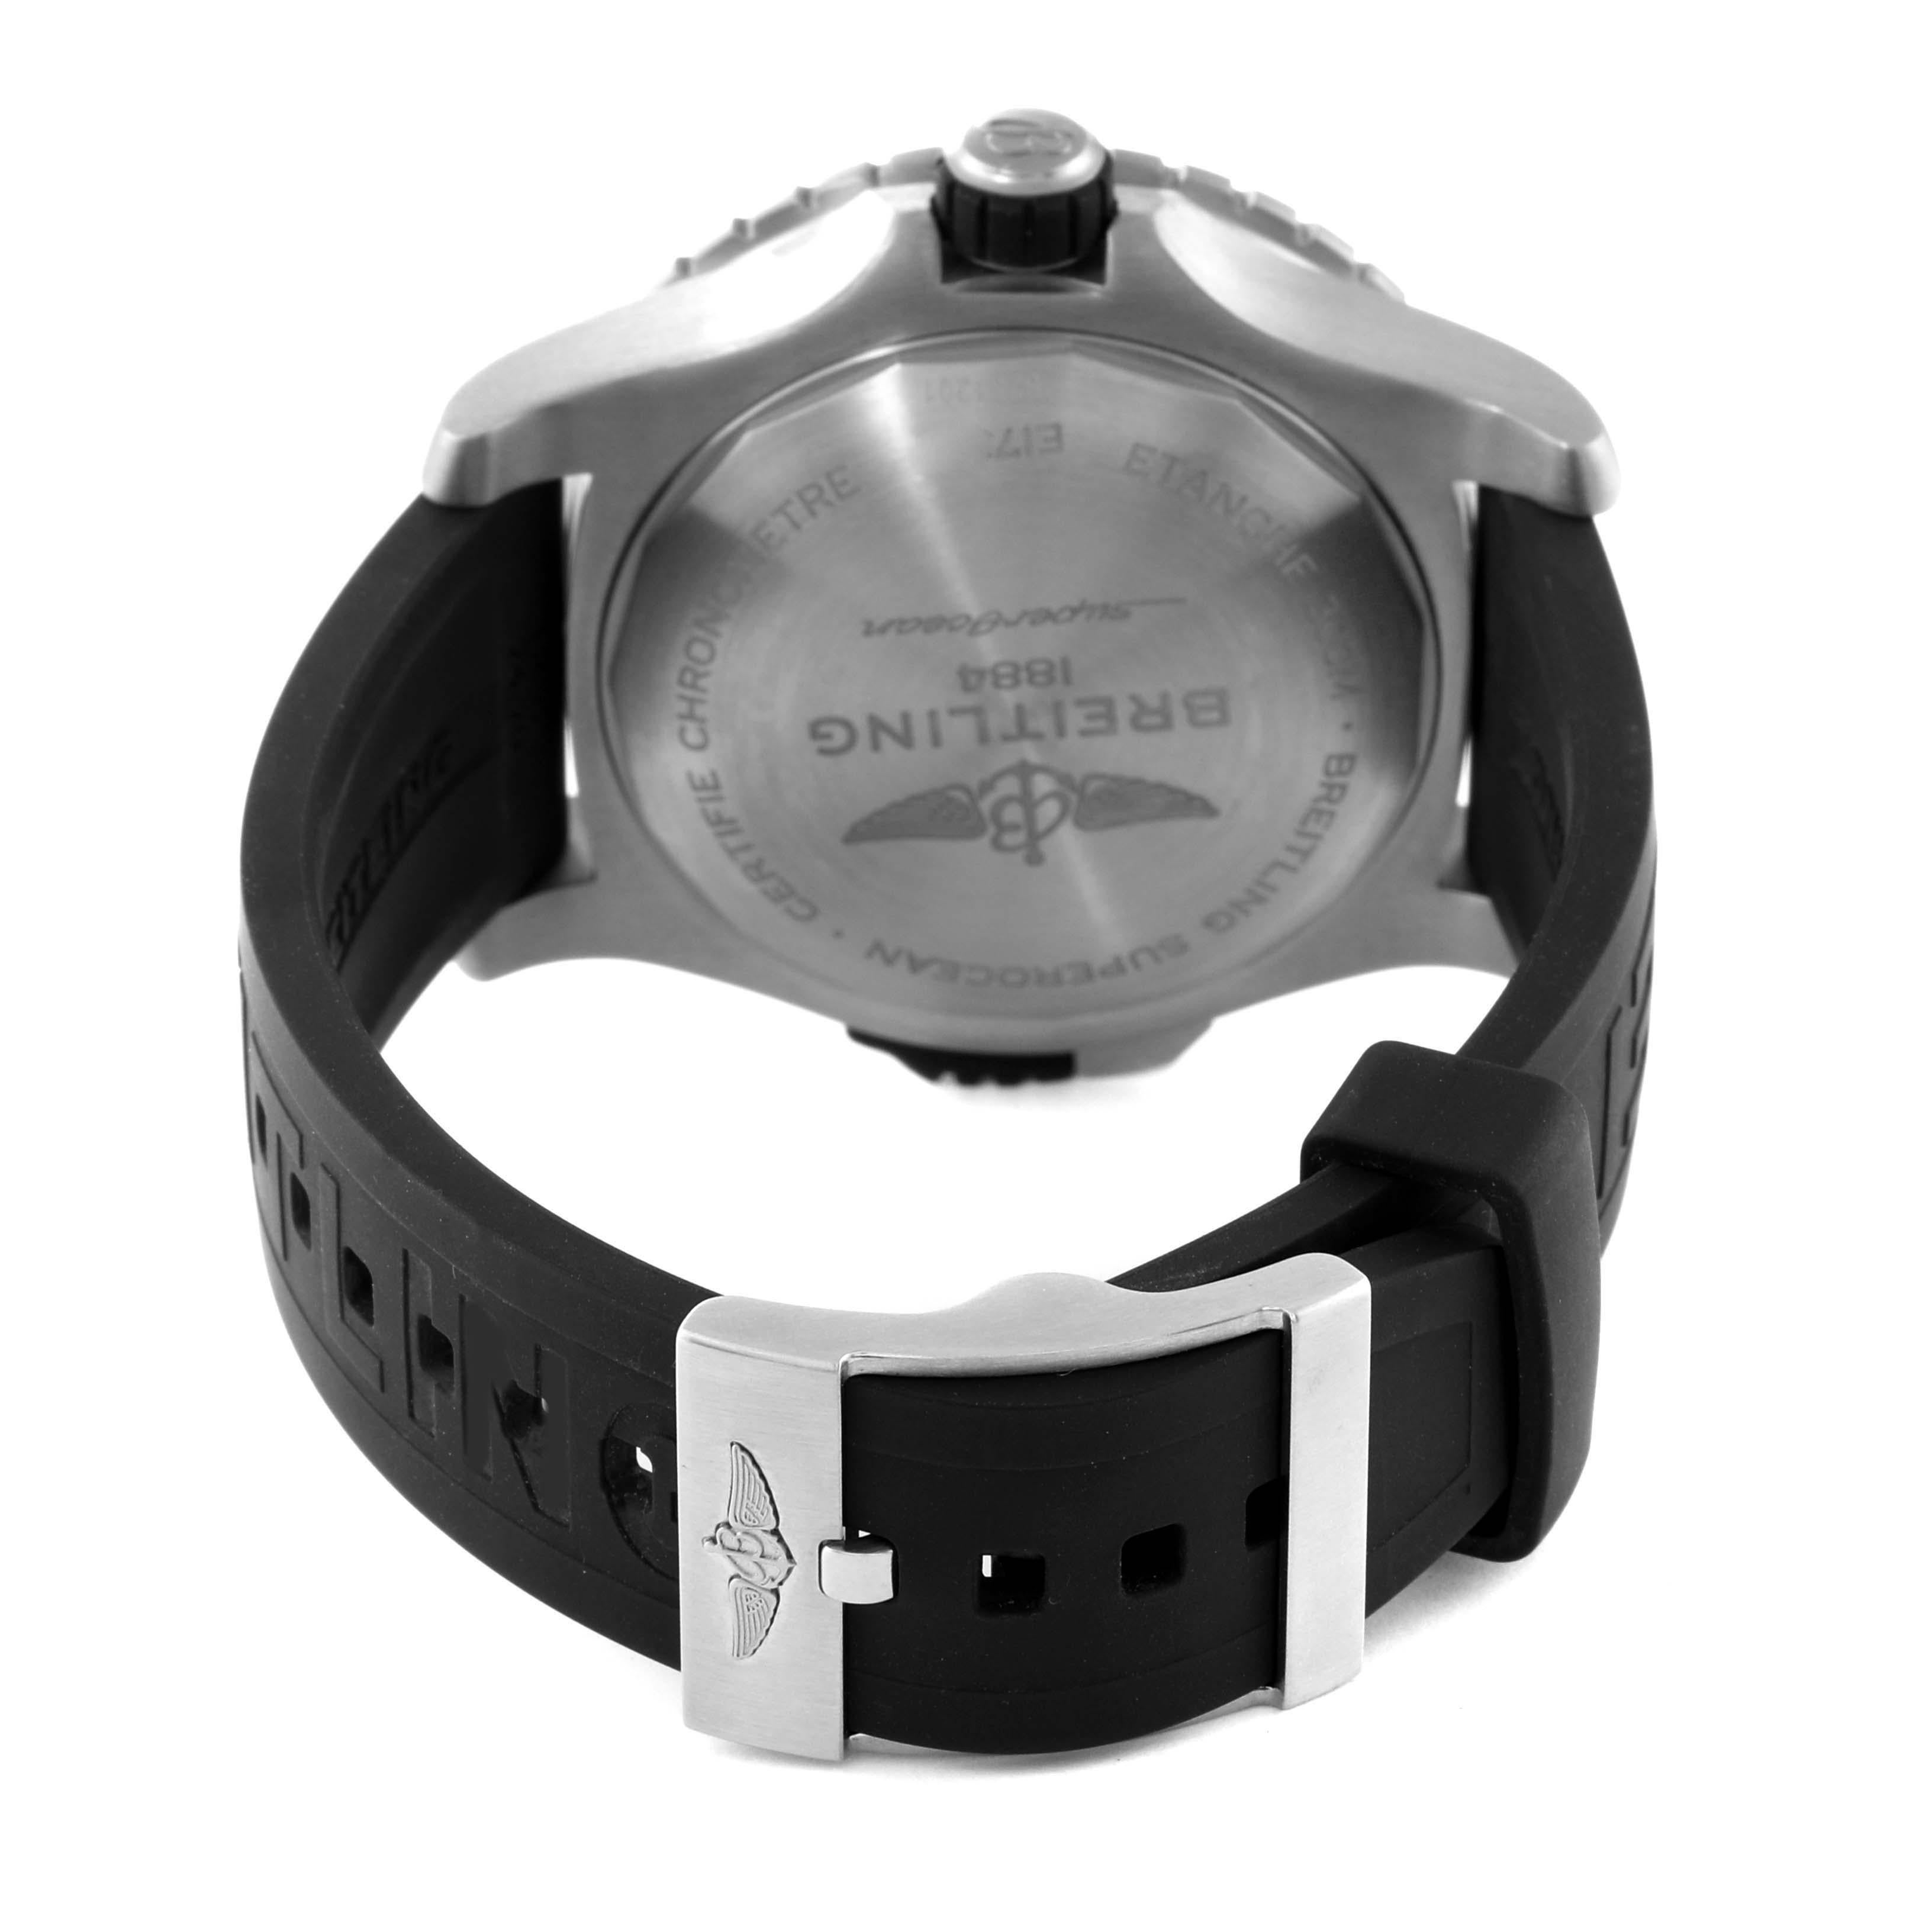 Breitling Superocean Yellow Dial Titanium Mens Watch E17369 Unworn For Sale 2